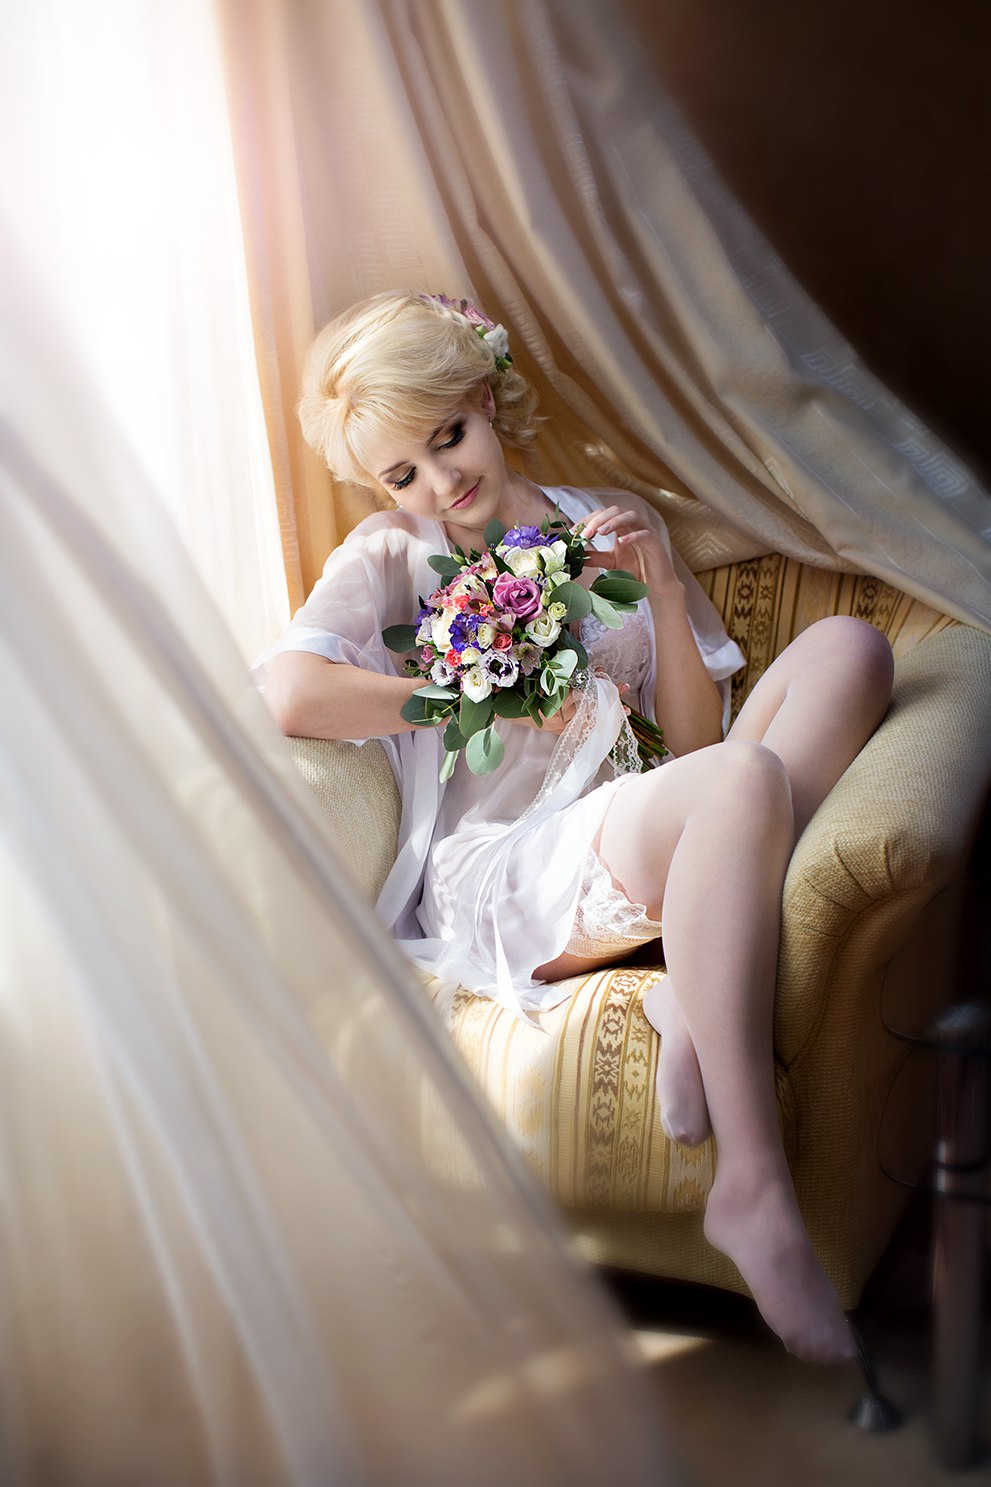 невеста | Фотограф Наталья Тихонова | foto.by фото.бай